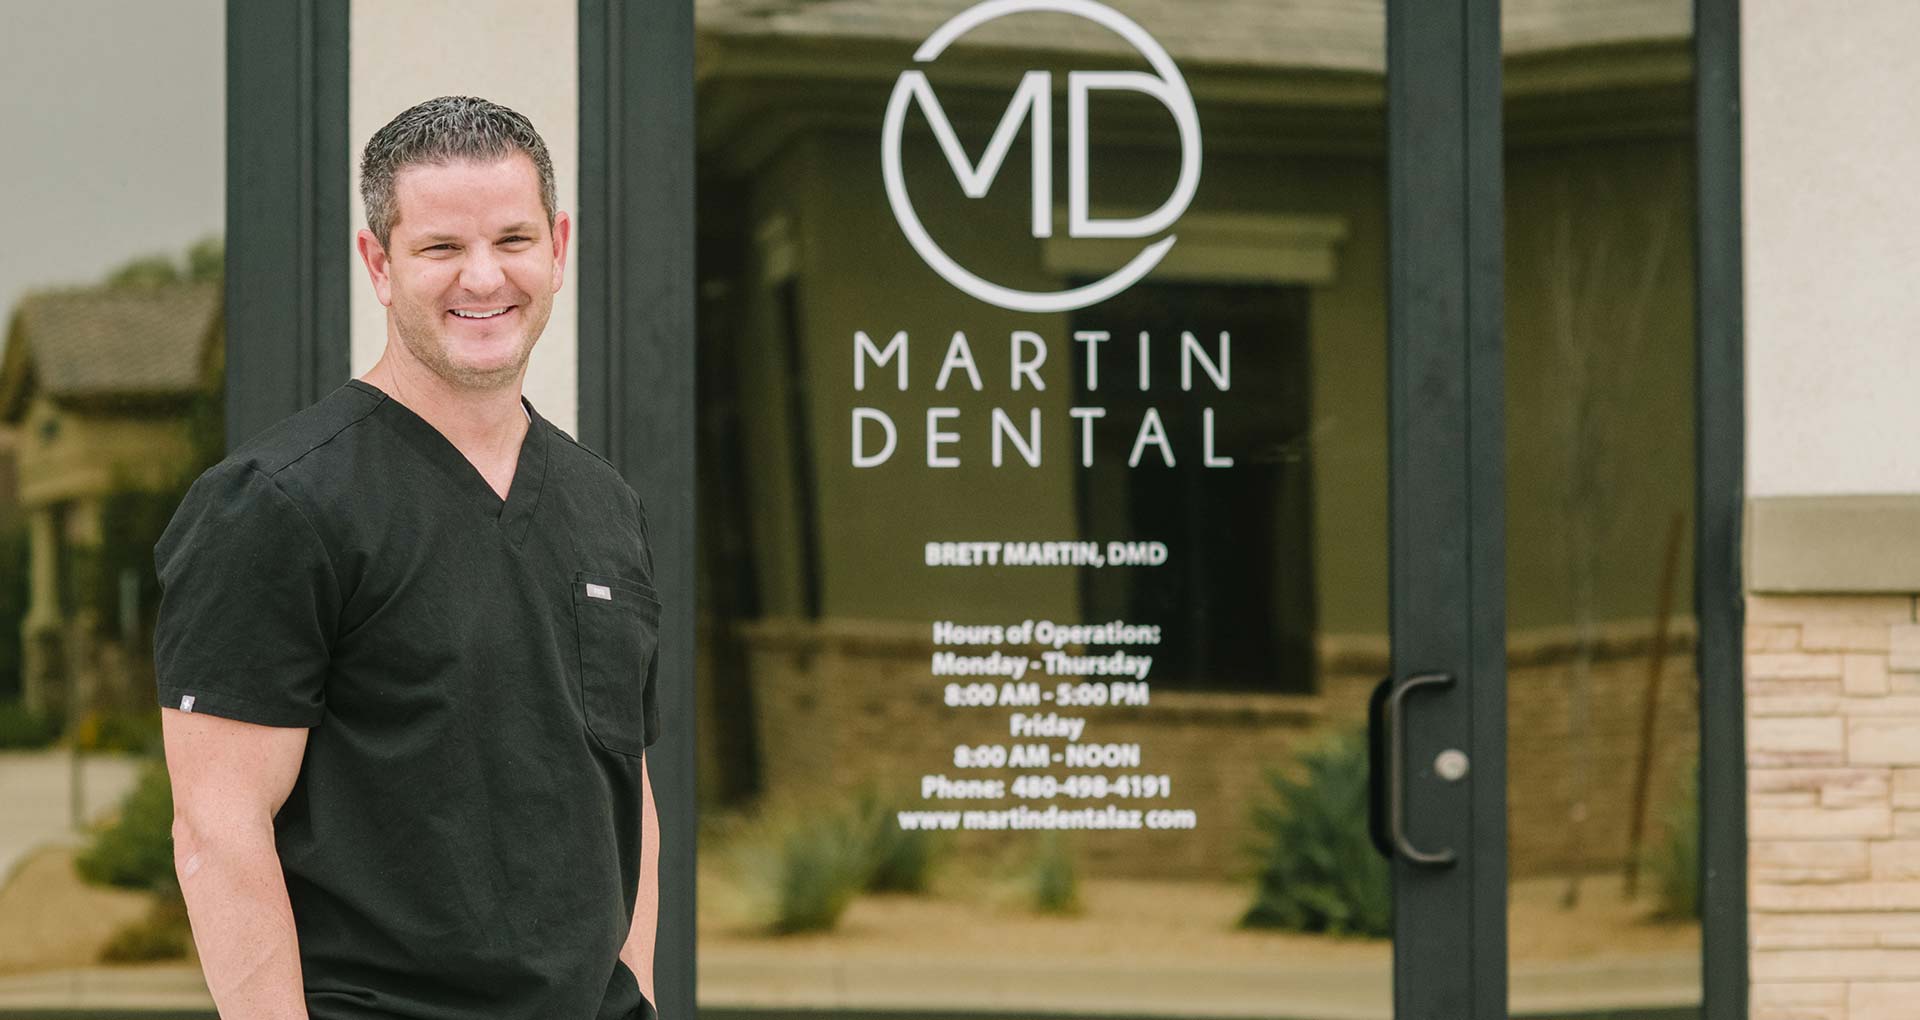 Affordable Dentist, Queen Creek. Ways To Find Good Dentist